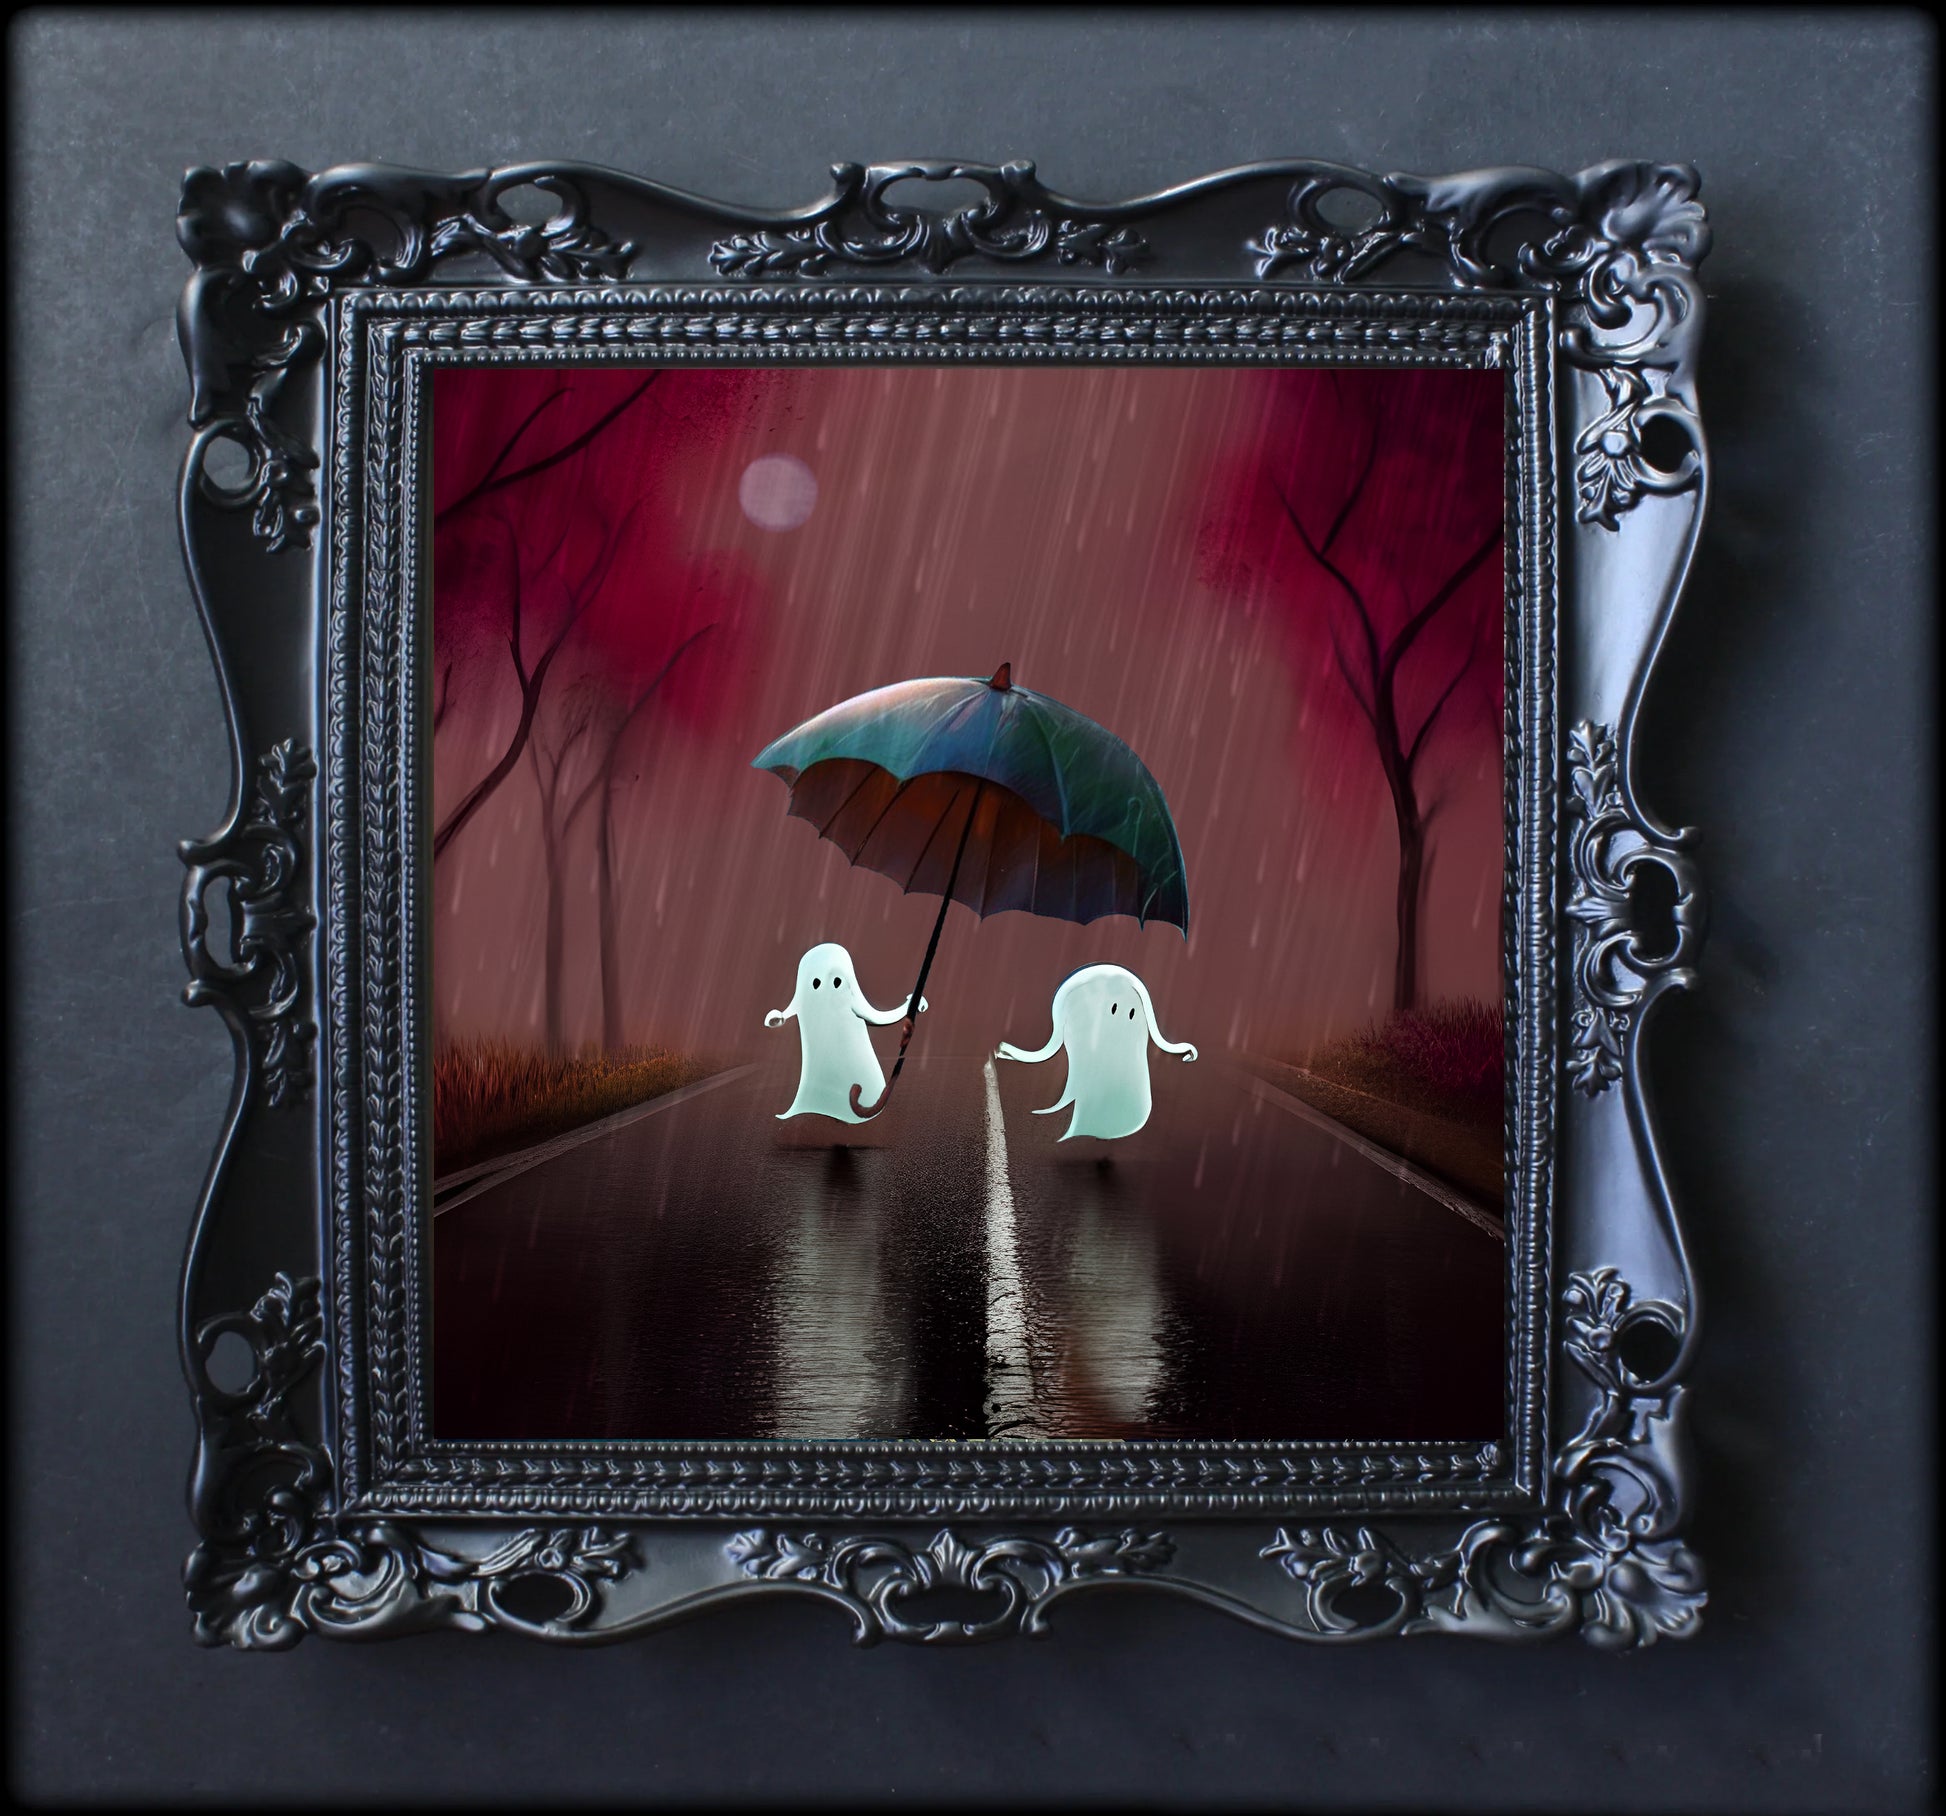 Ghosts in the rain with umbrella art artwork print